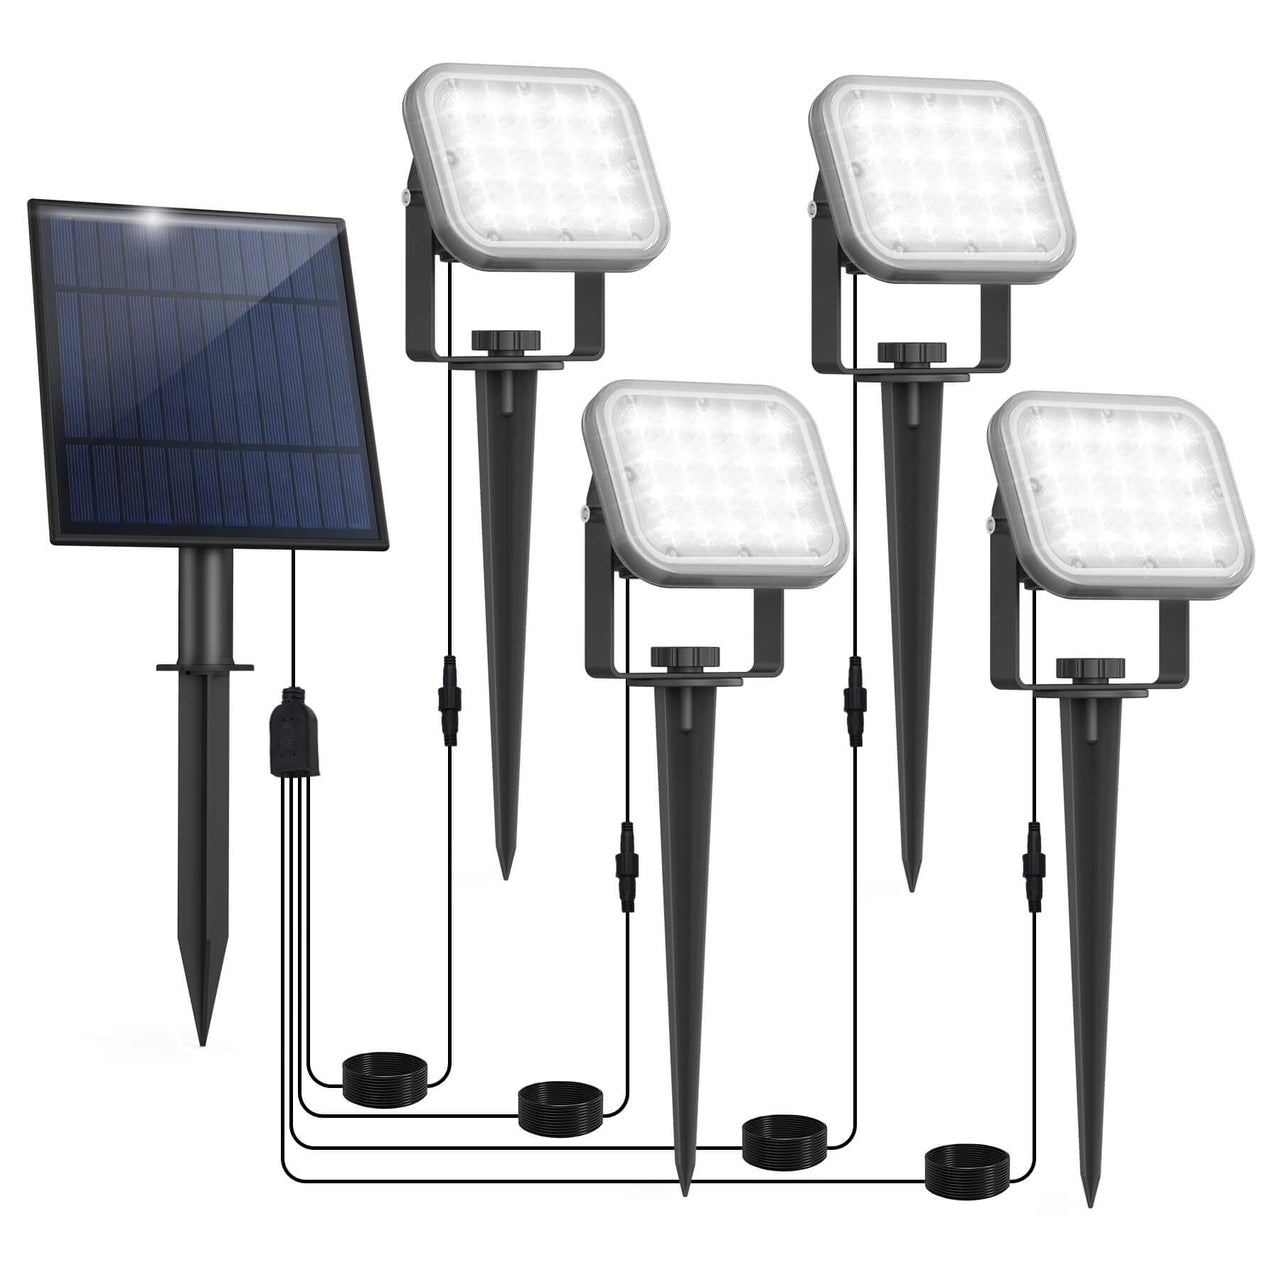 TSUN 20 LEDs 4-in-1 Solar Landscape Spotlights White